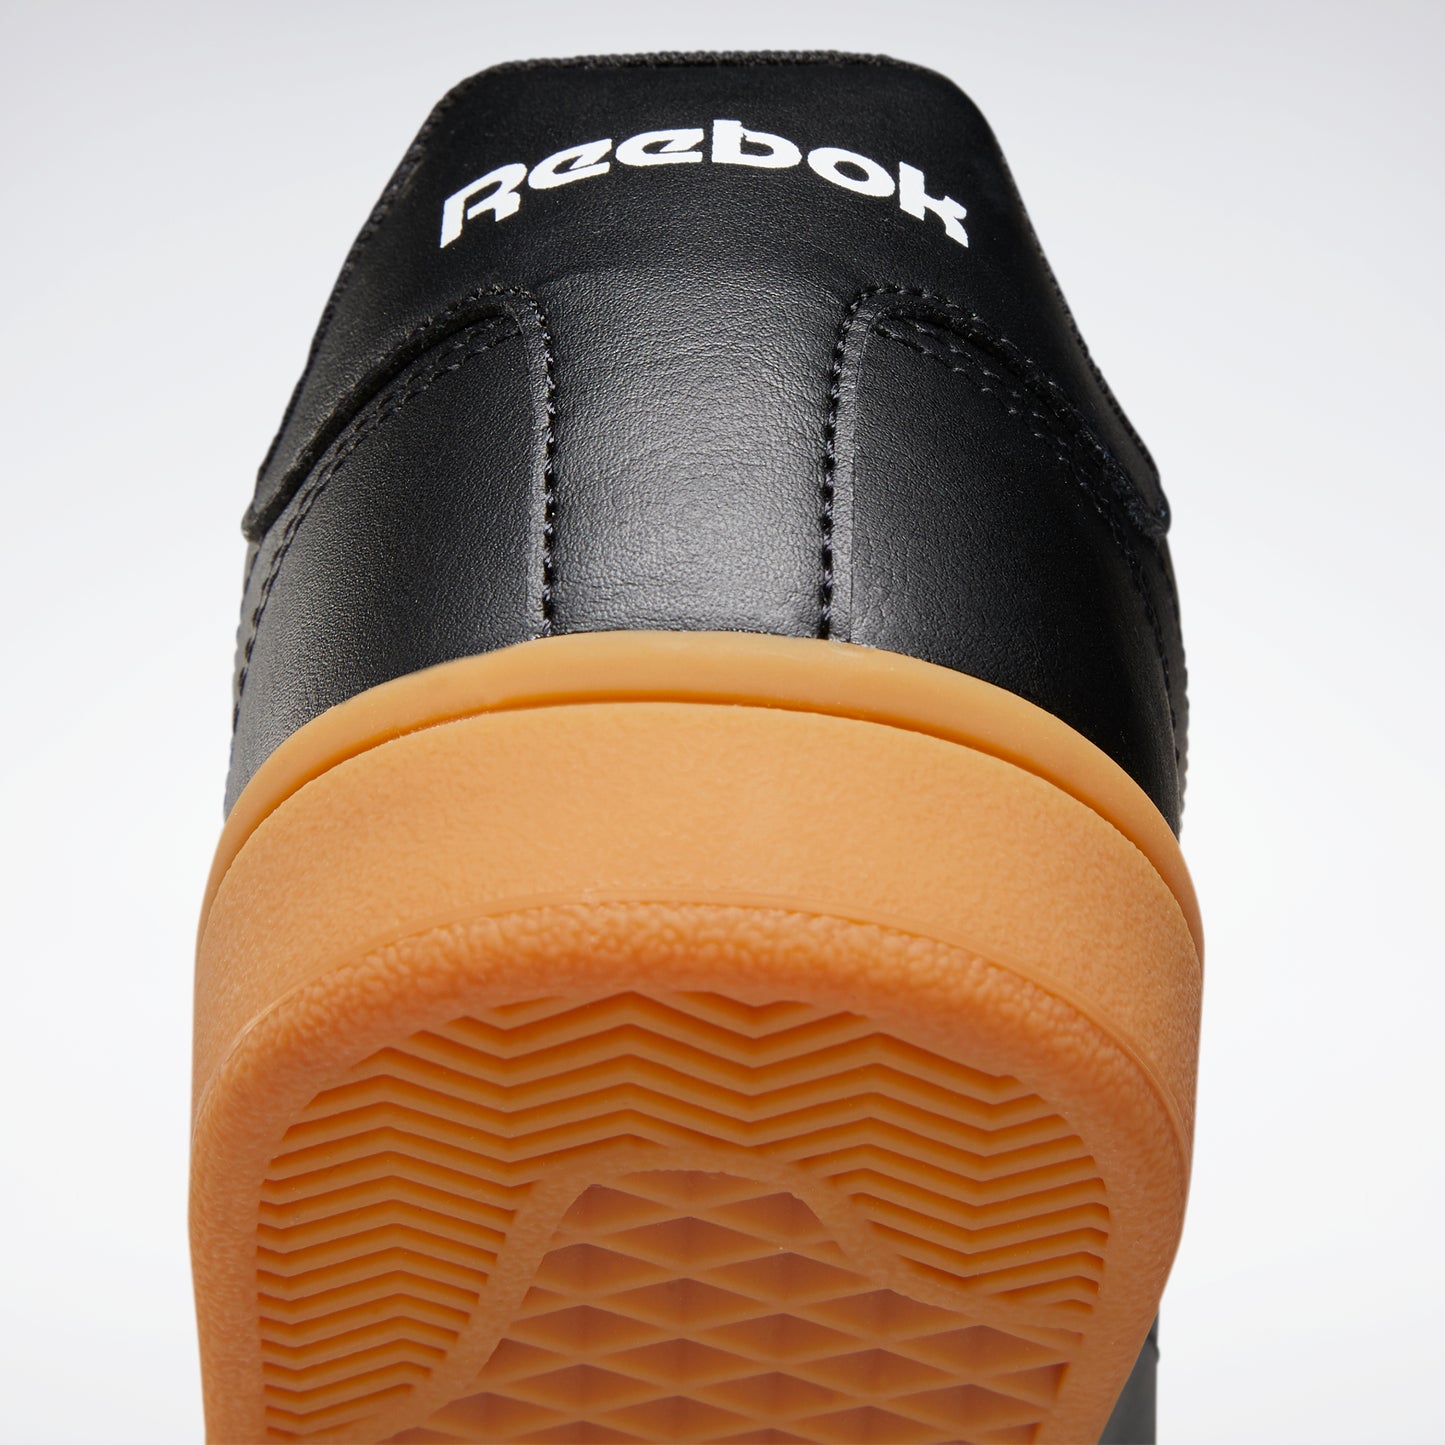 Reebok Royal Complete Clean 2.0 Shoes Black/White